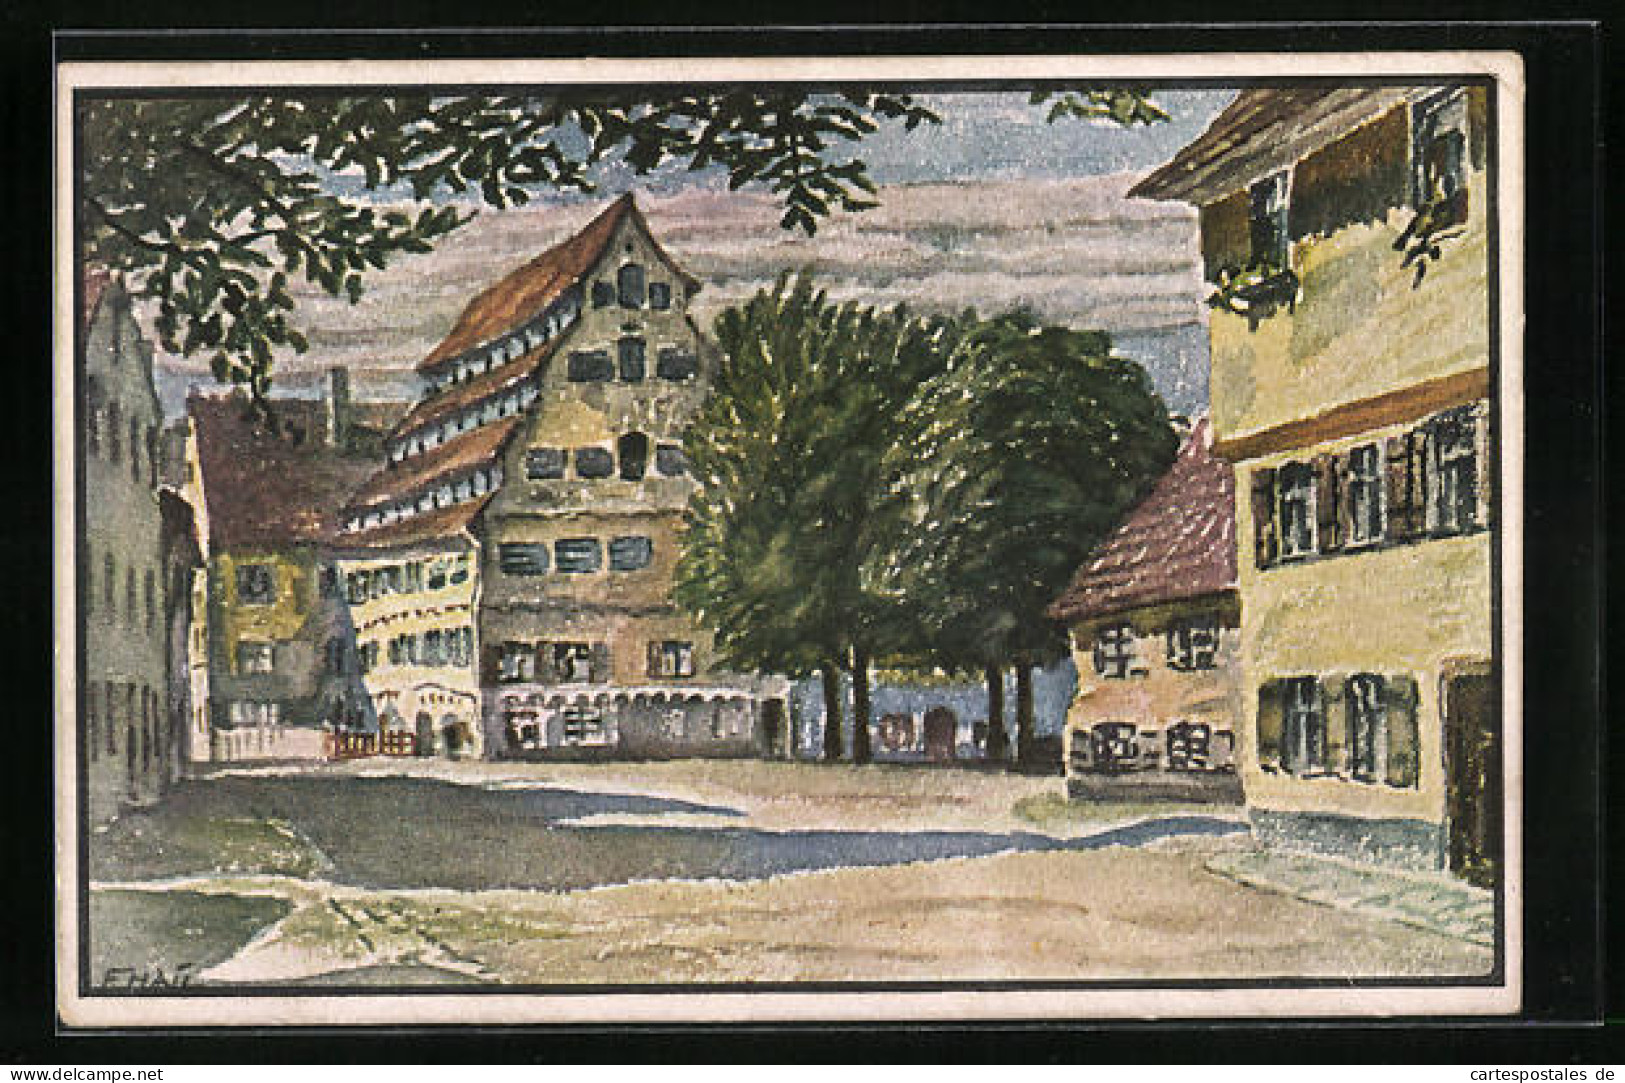 Künstler-AK Memmingen, Gerberplatz mit Sieben-Dächerhaus 